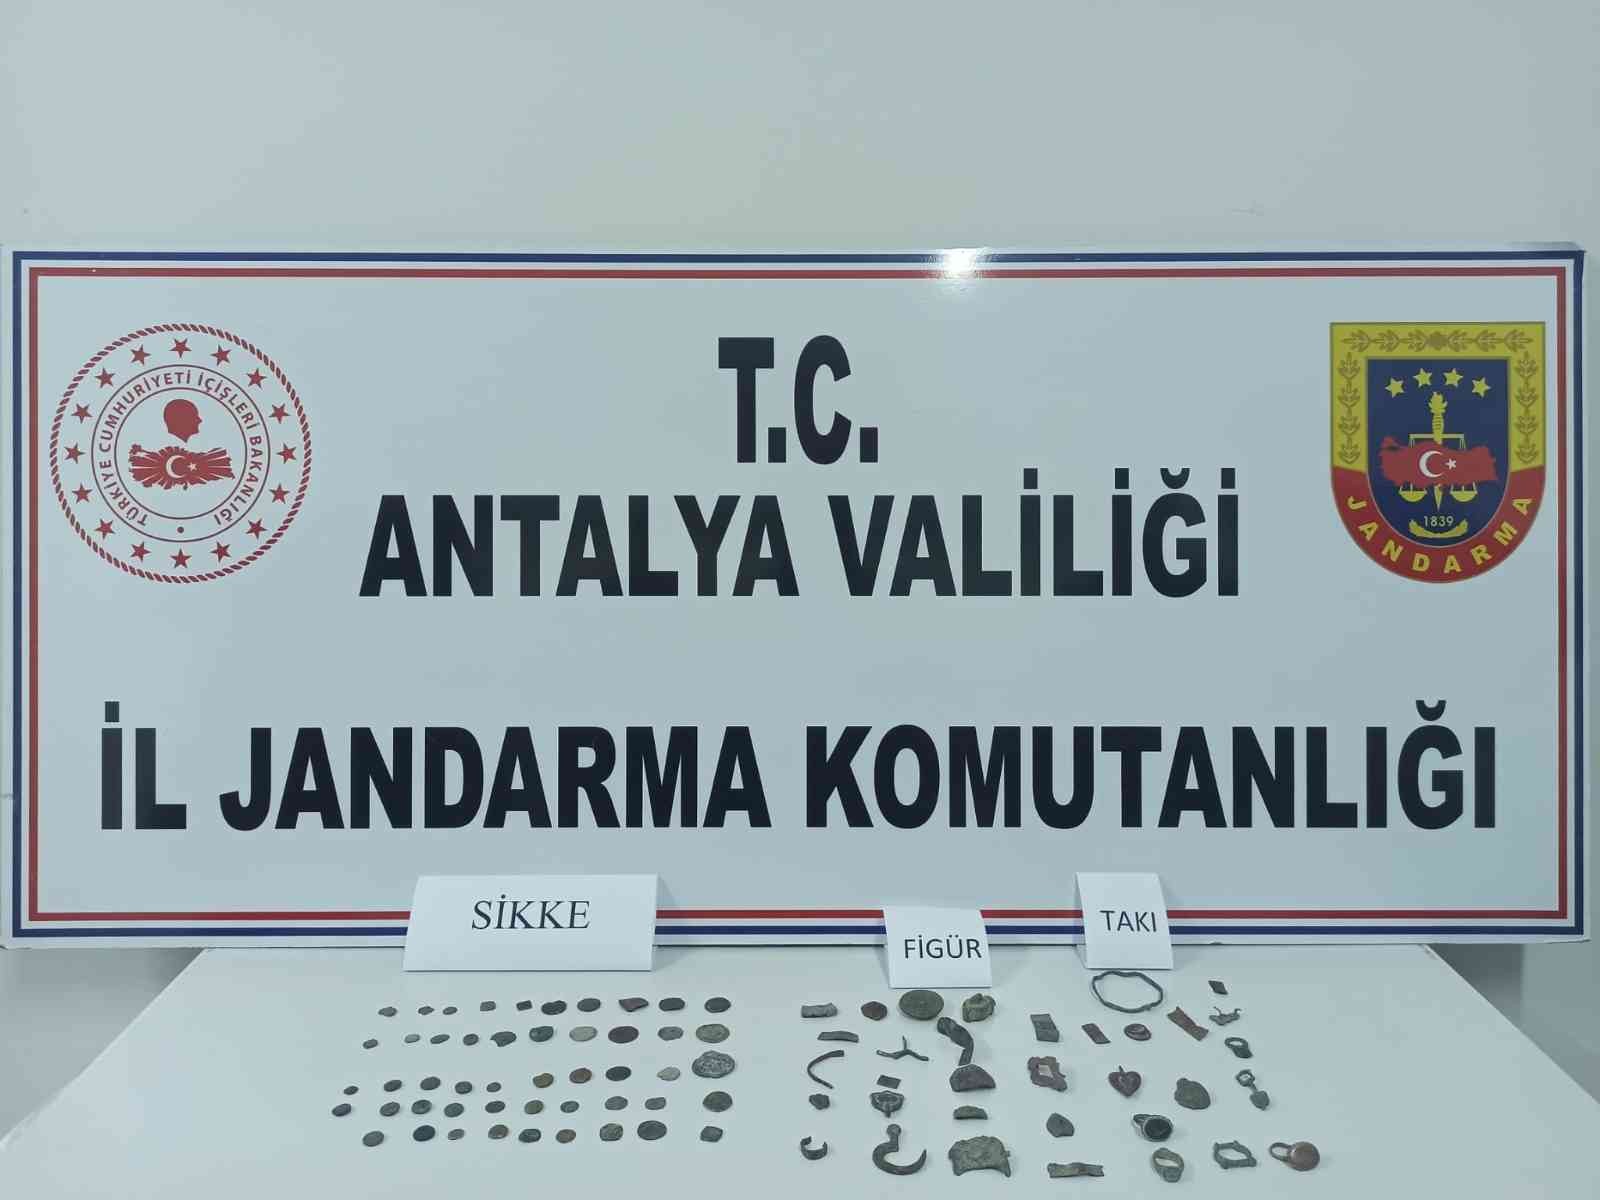 Antalya’da jandarma, 84 tarihi eser ele geçirdi #antalya